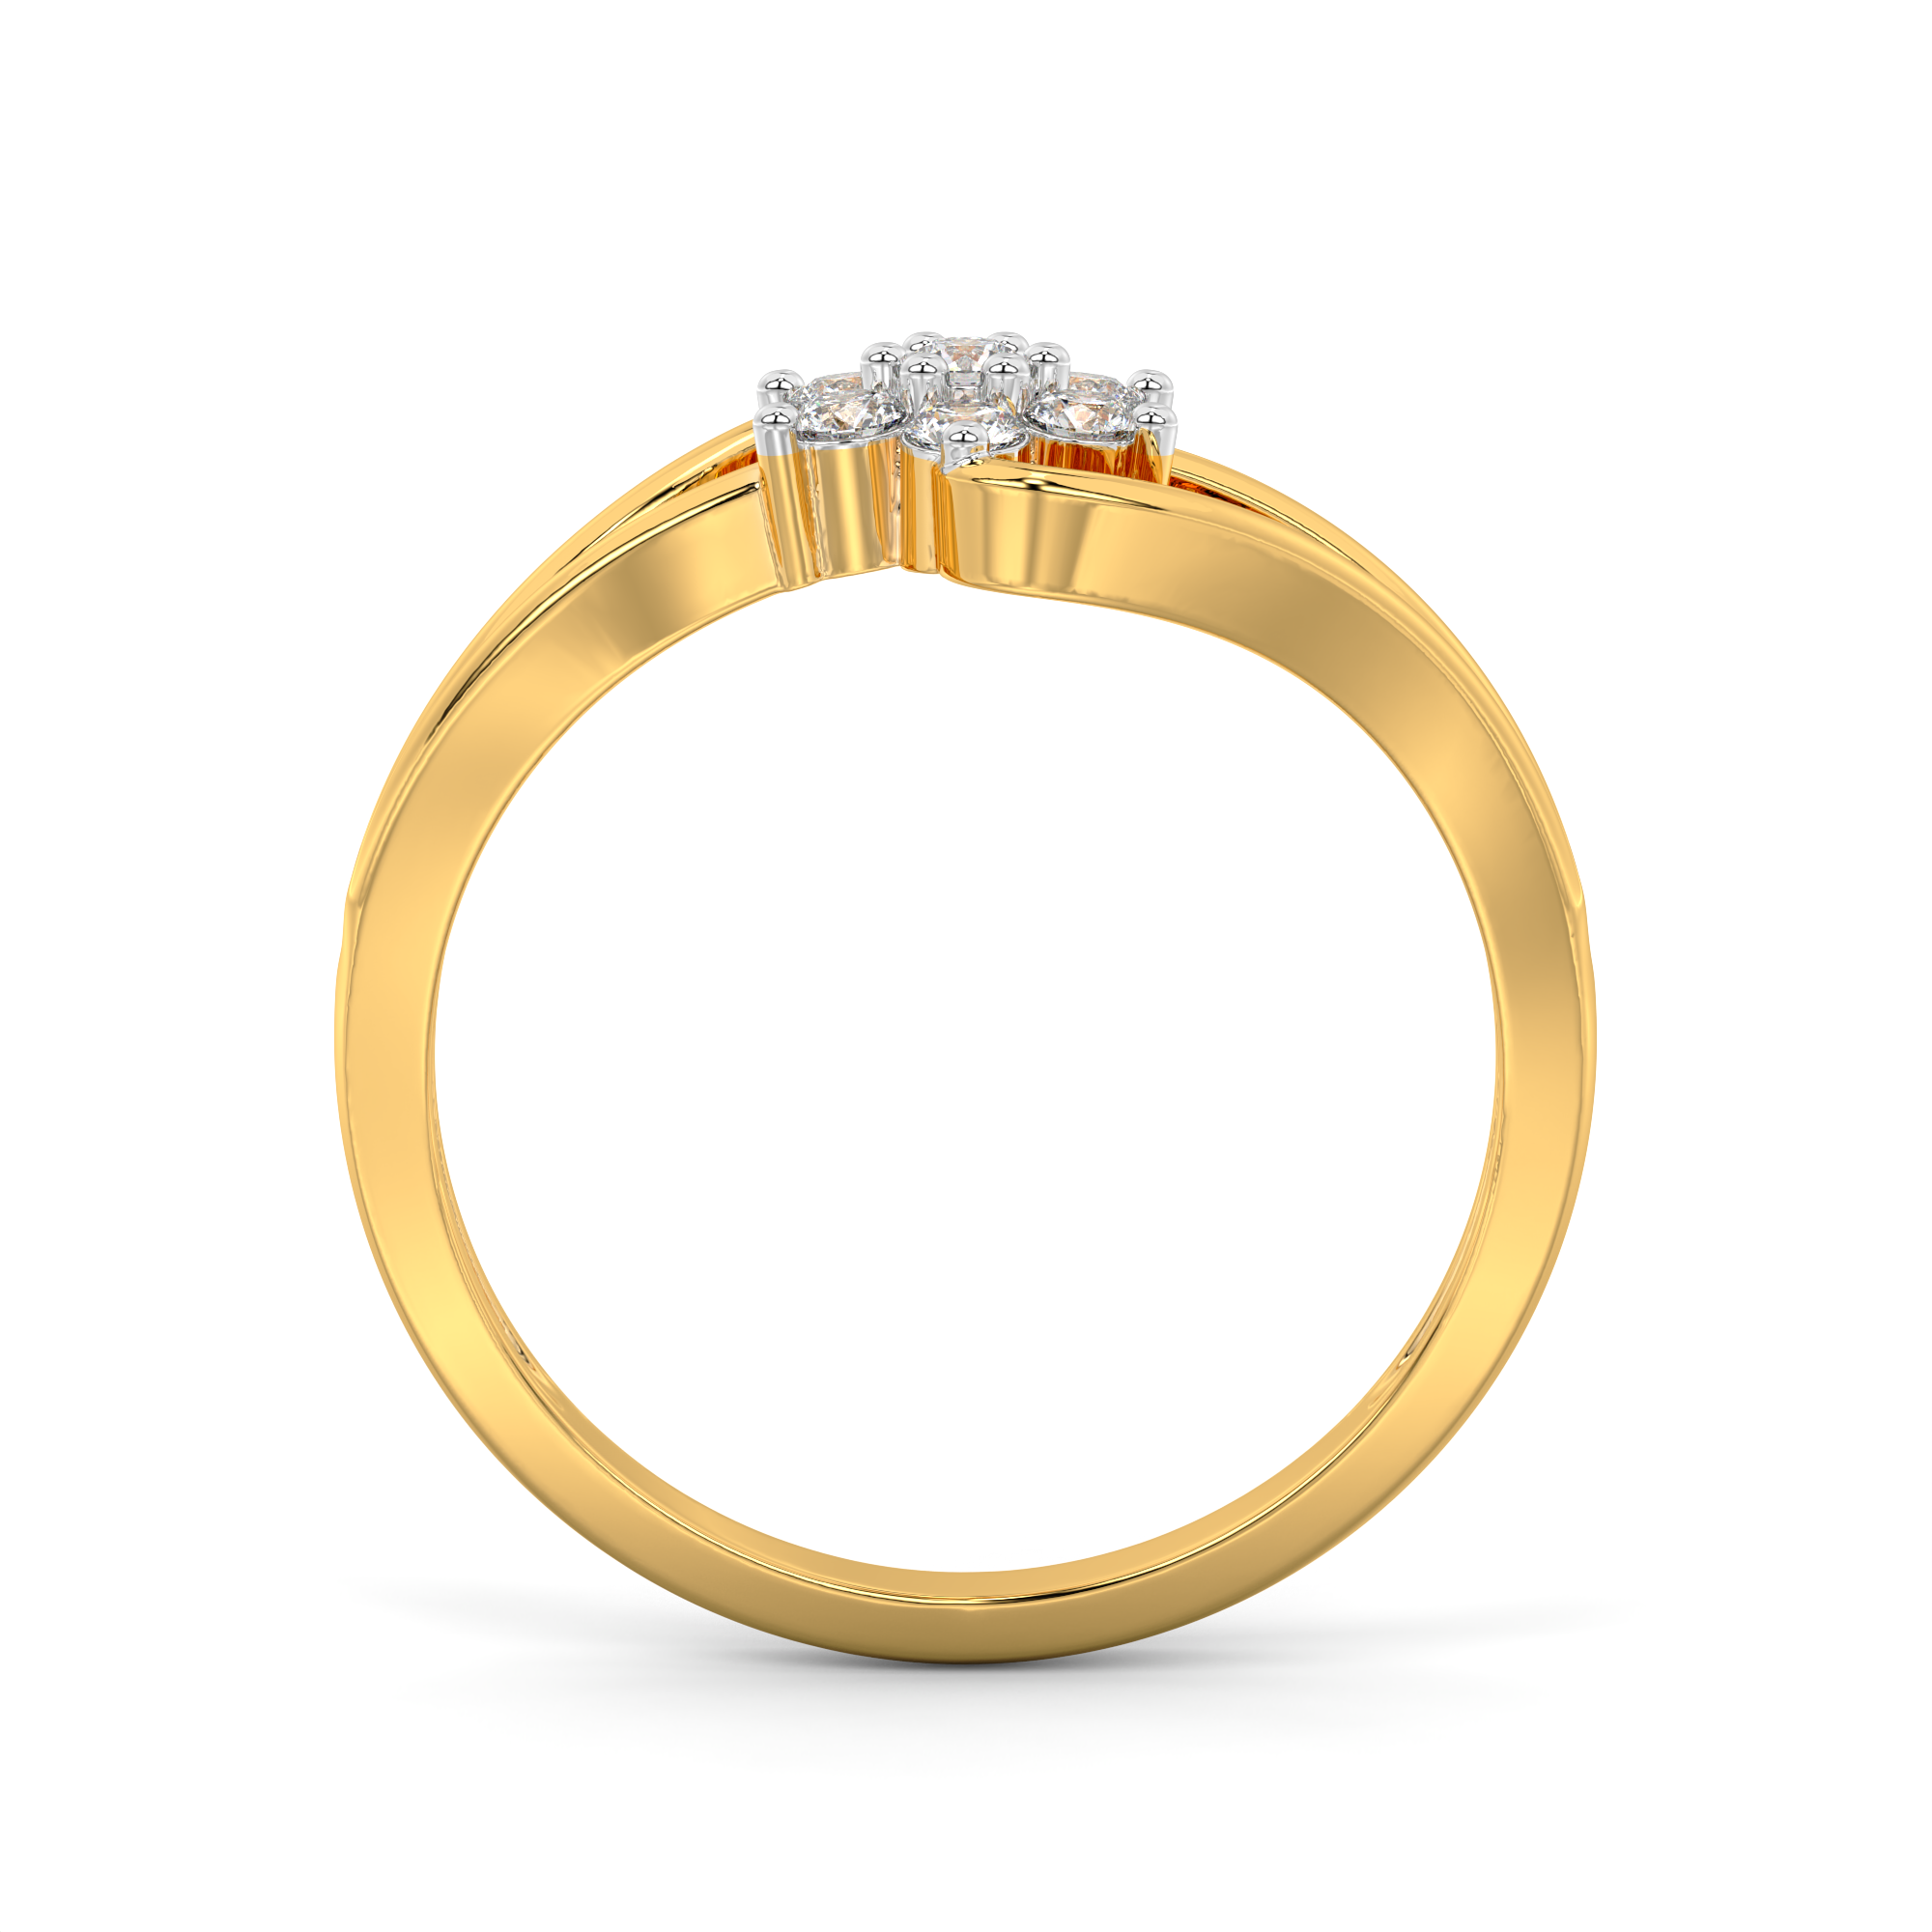 White Gold Rings For Men| 2019 Designs| Kalyan Jewellers